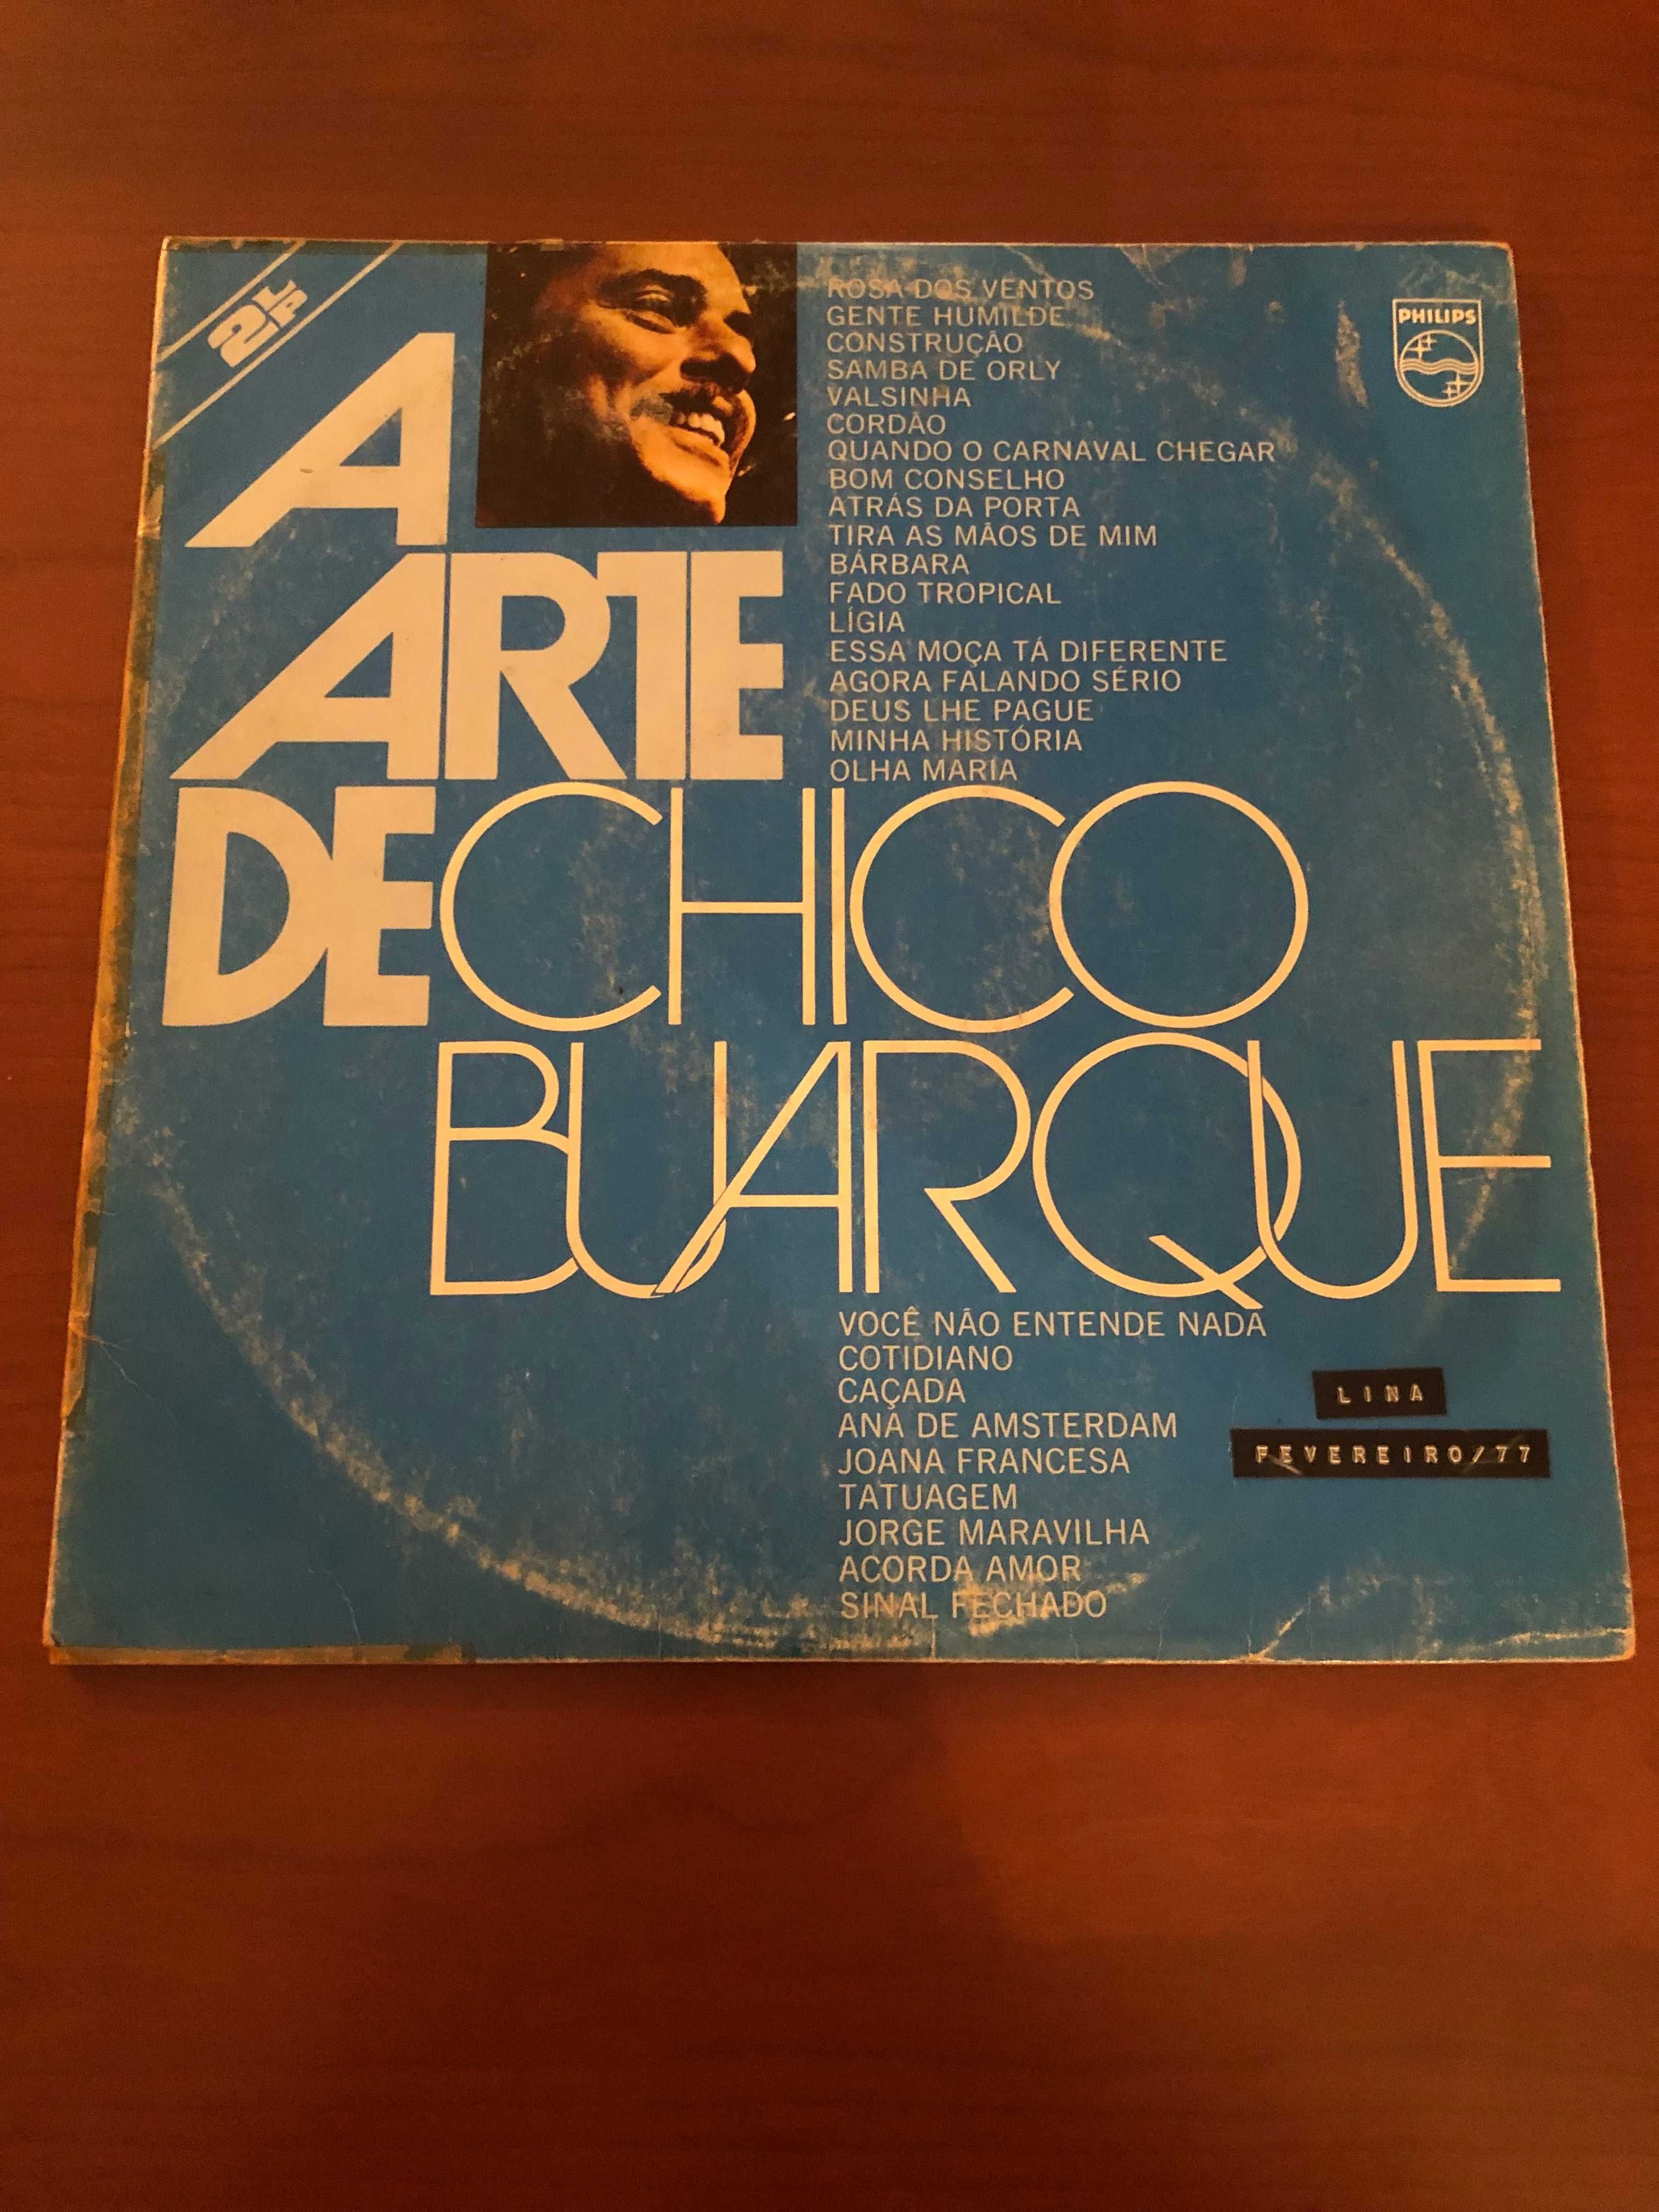 Disco Duplo - LP - A arte de CHICO BUARQUE